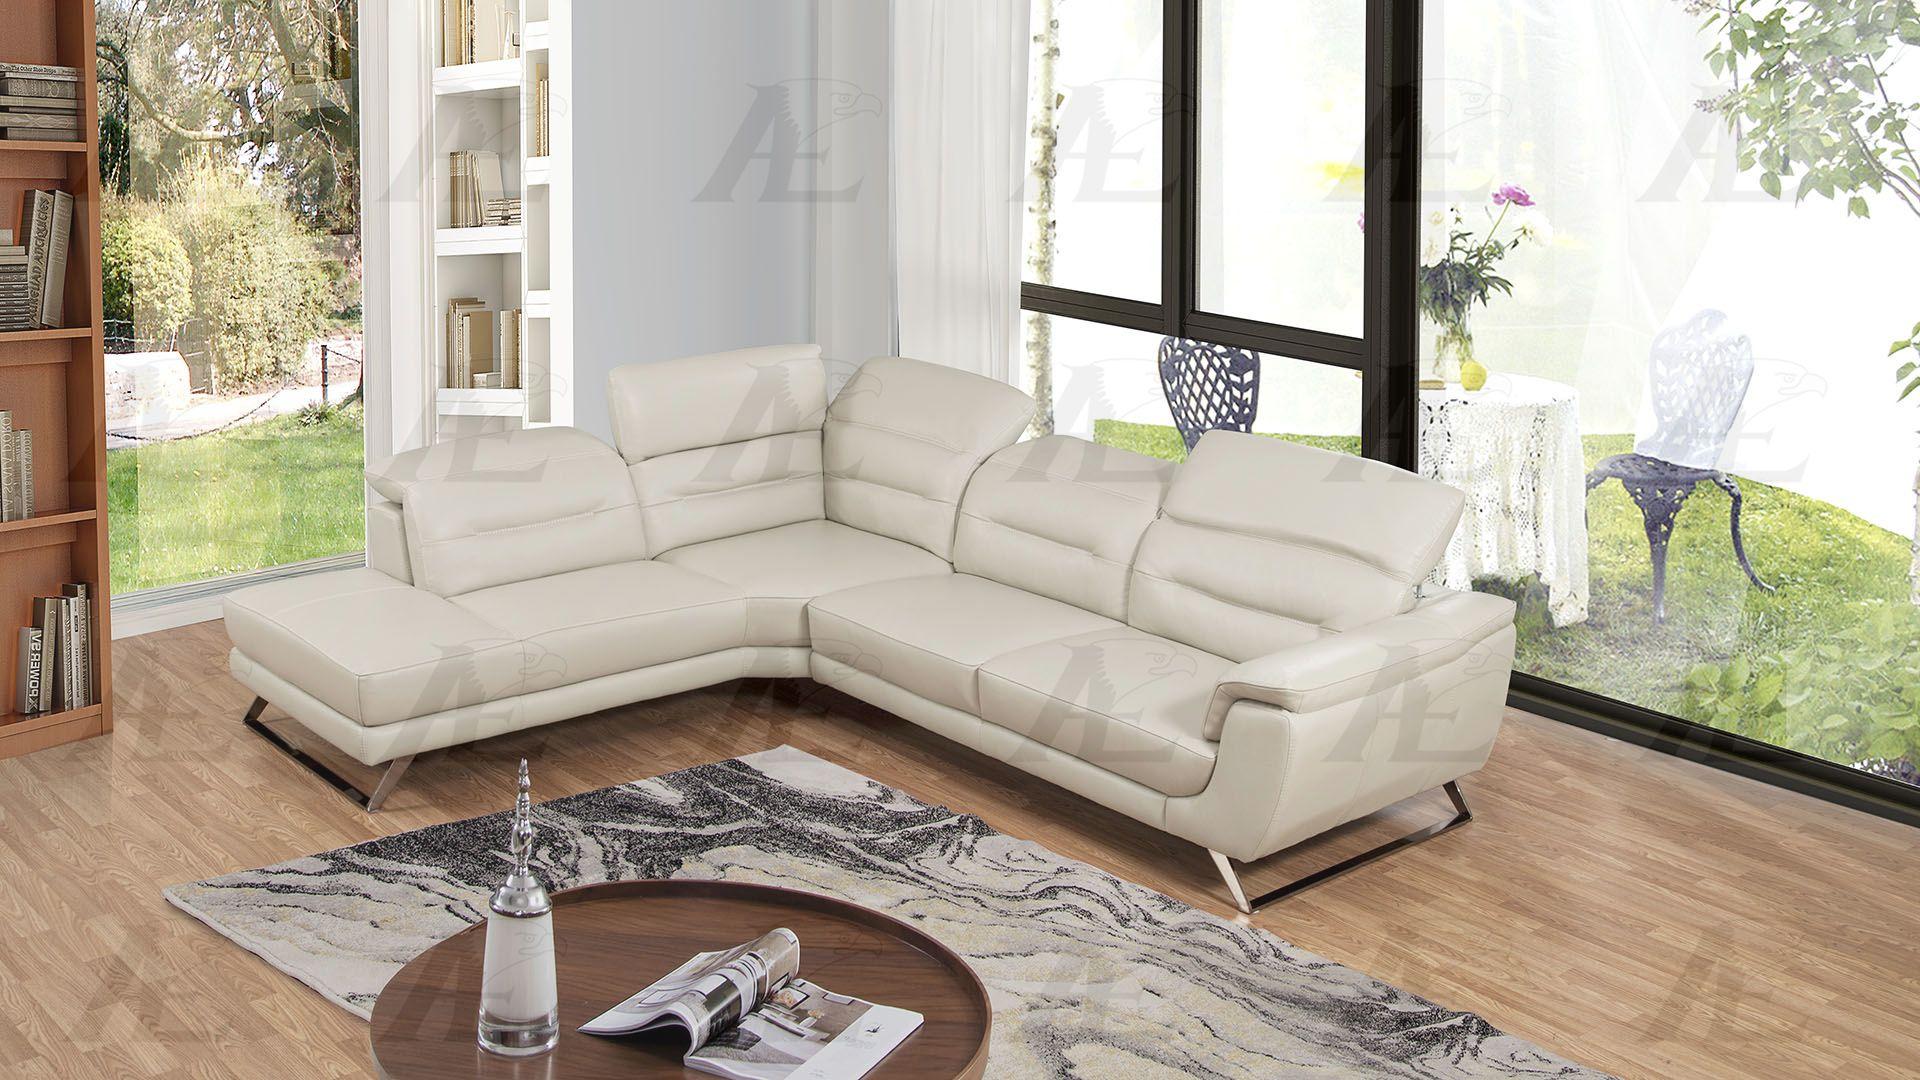 Contemporary, Modern Sectional Sofa EK-LH756-LG EK-LH756-LG-RHC in Light Gray Top grain leather